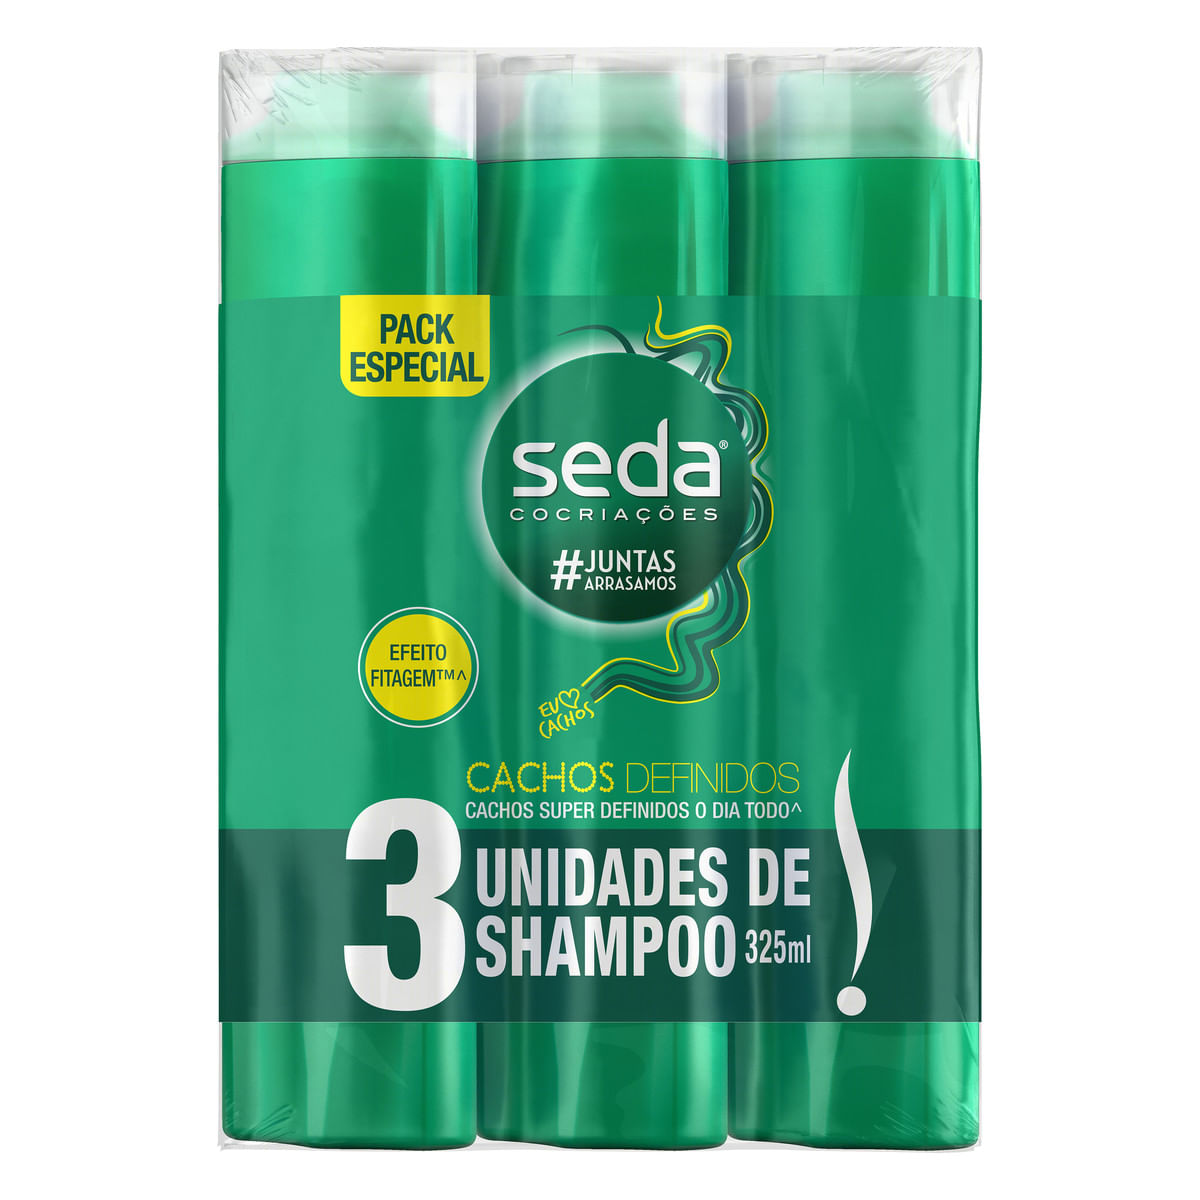  Linha Cachos Definidos Seda - Shampoo 325 Ml - (Seda